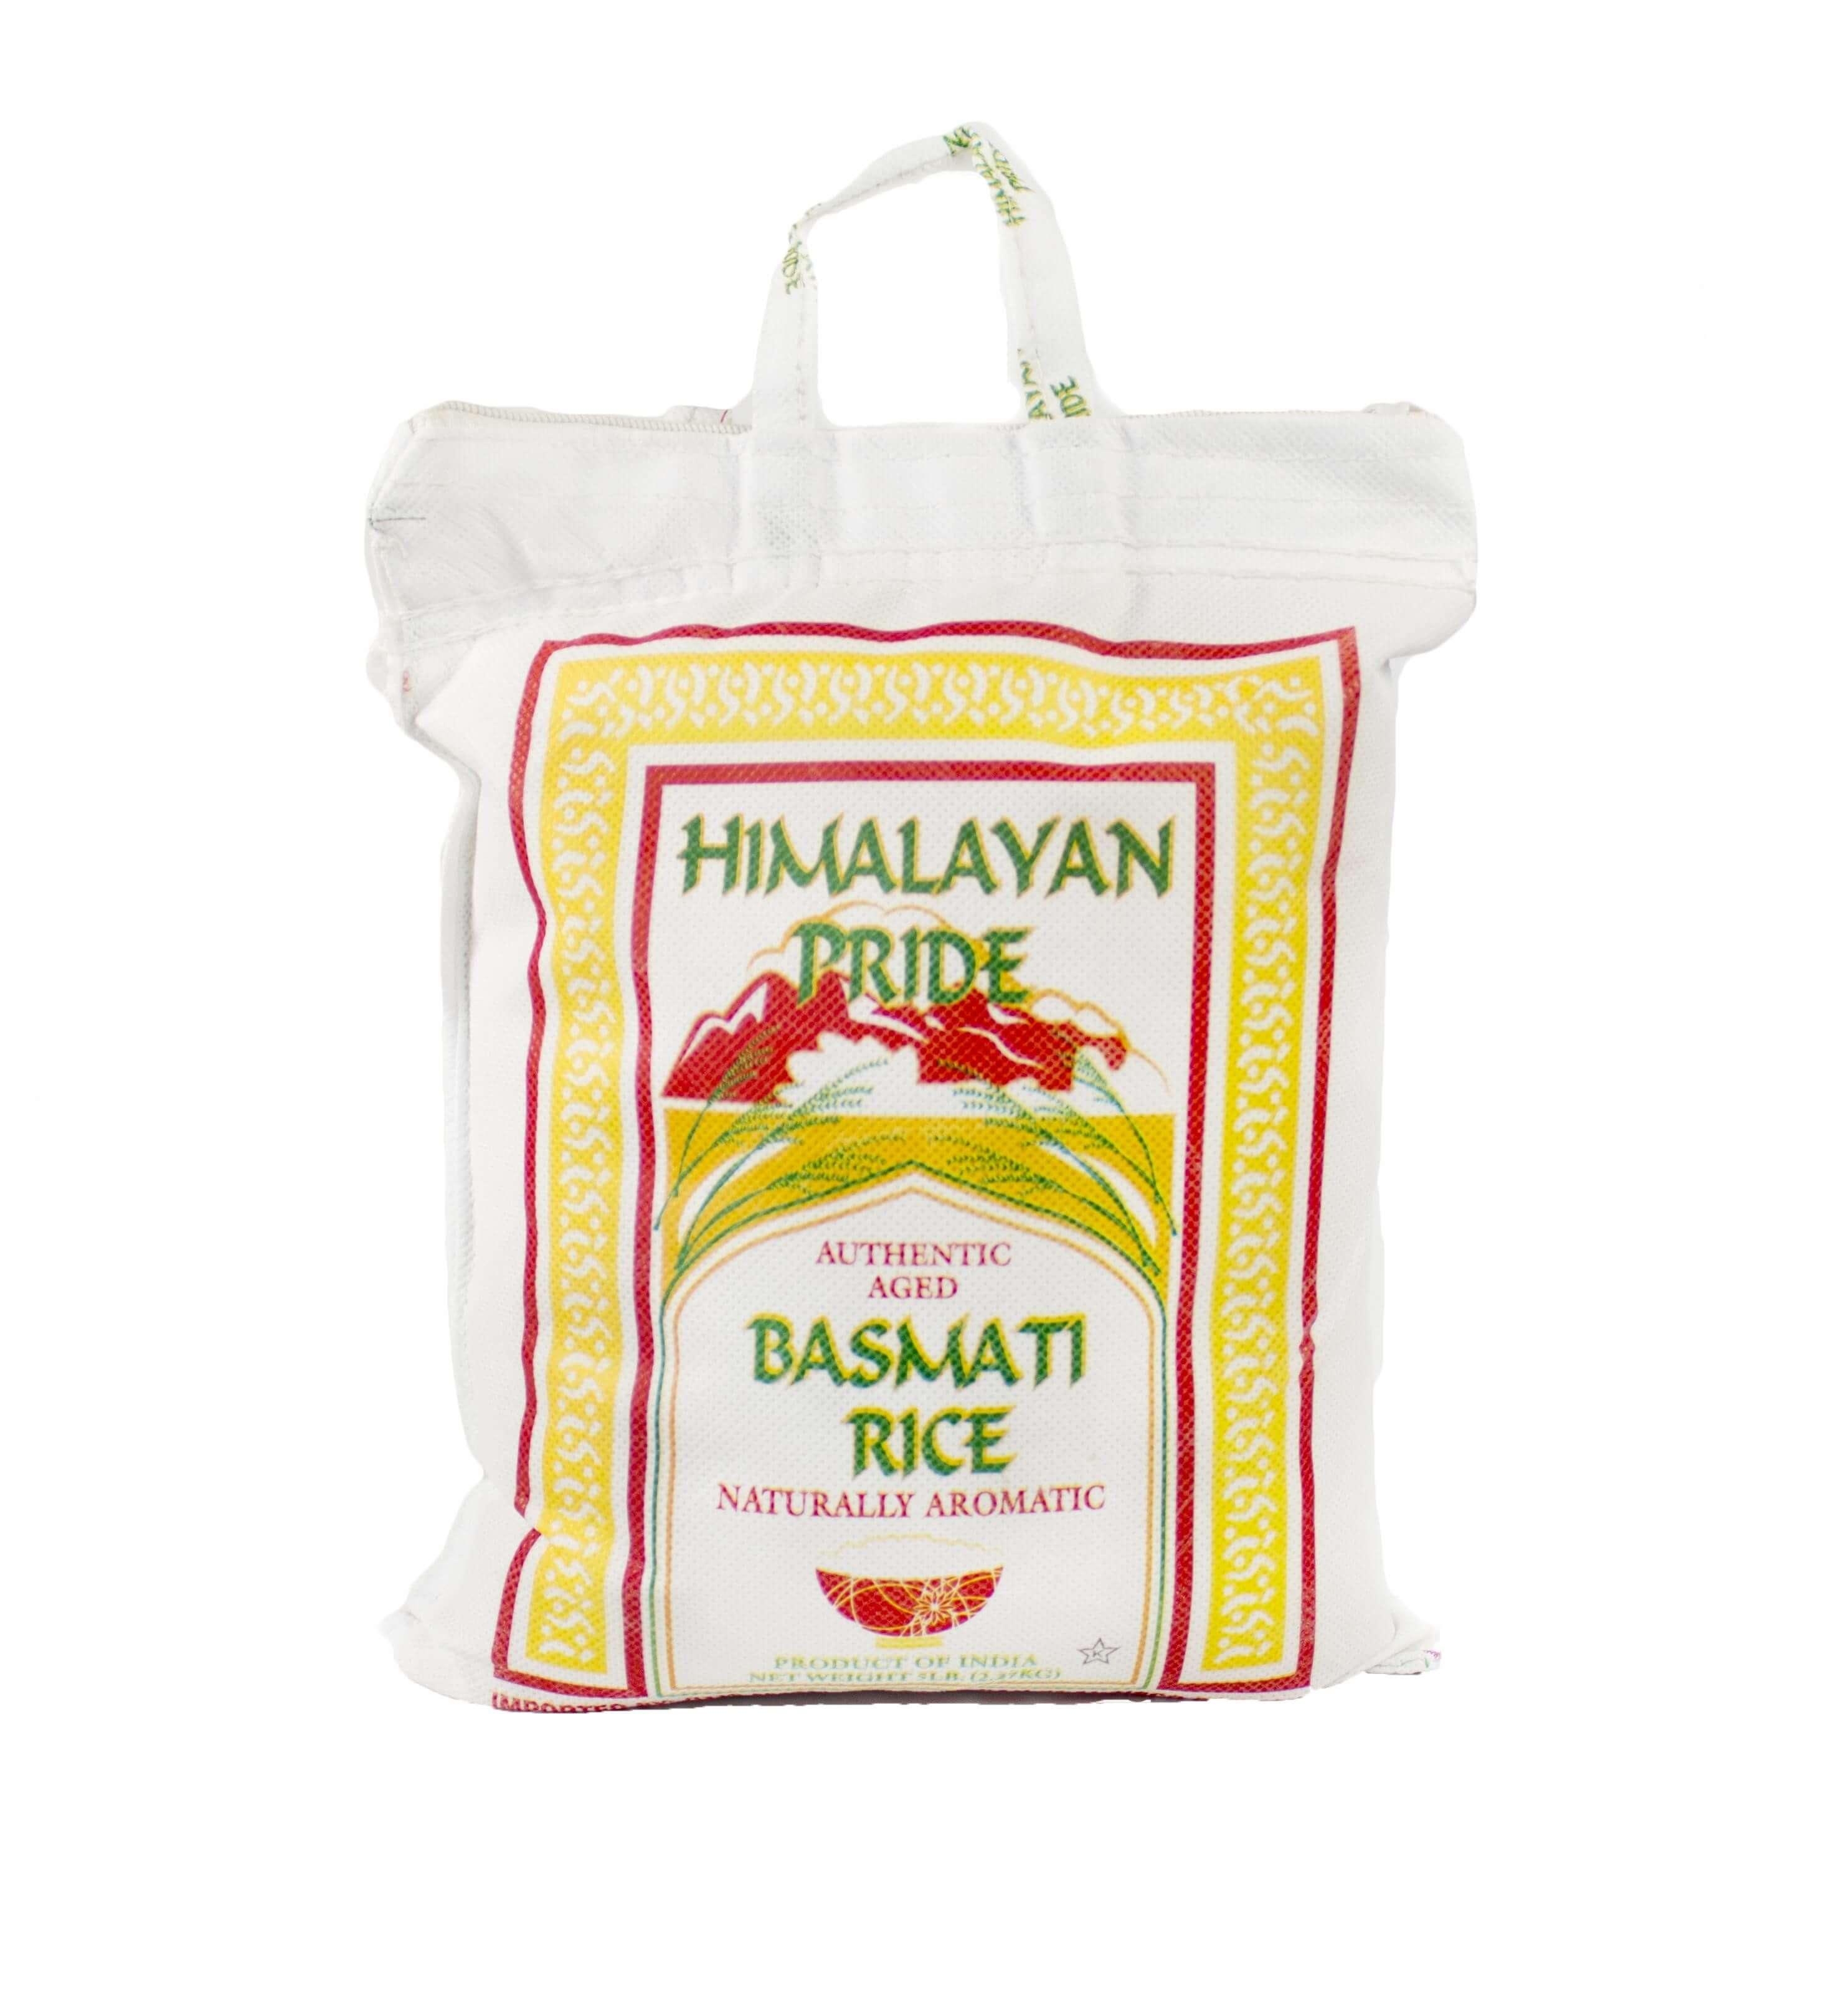 Himalayan Pride - Basmati Rice Authentic Aged Aromatic 5Lb.